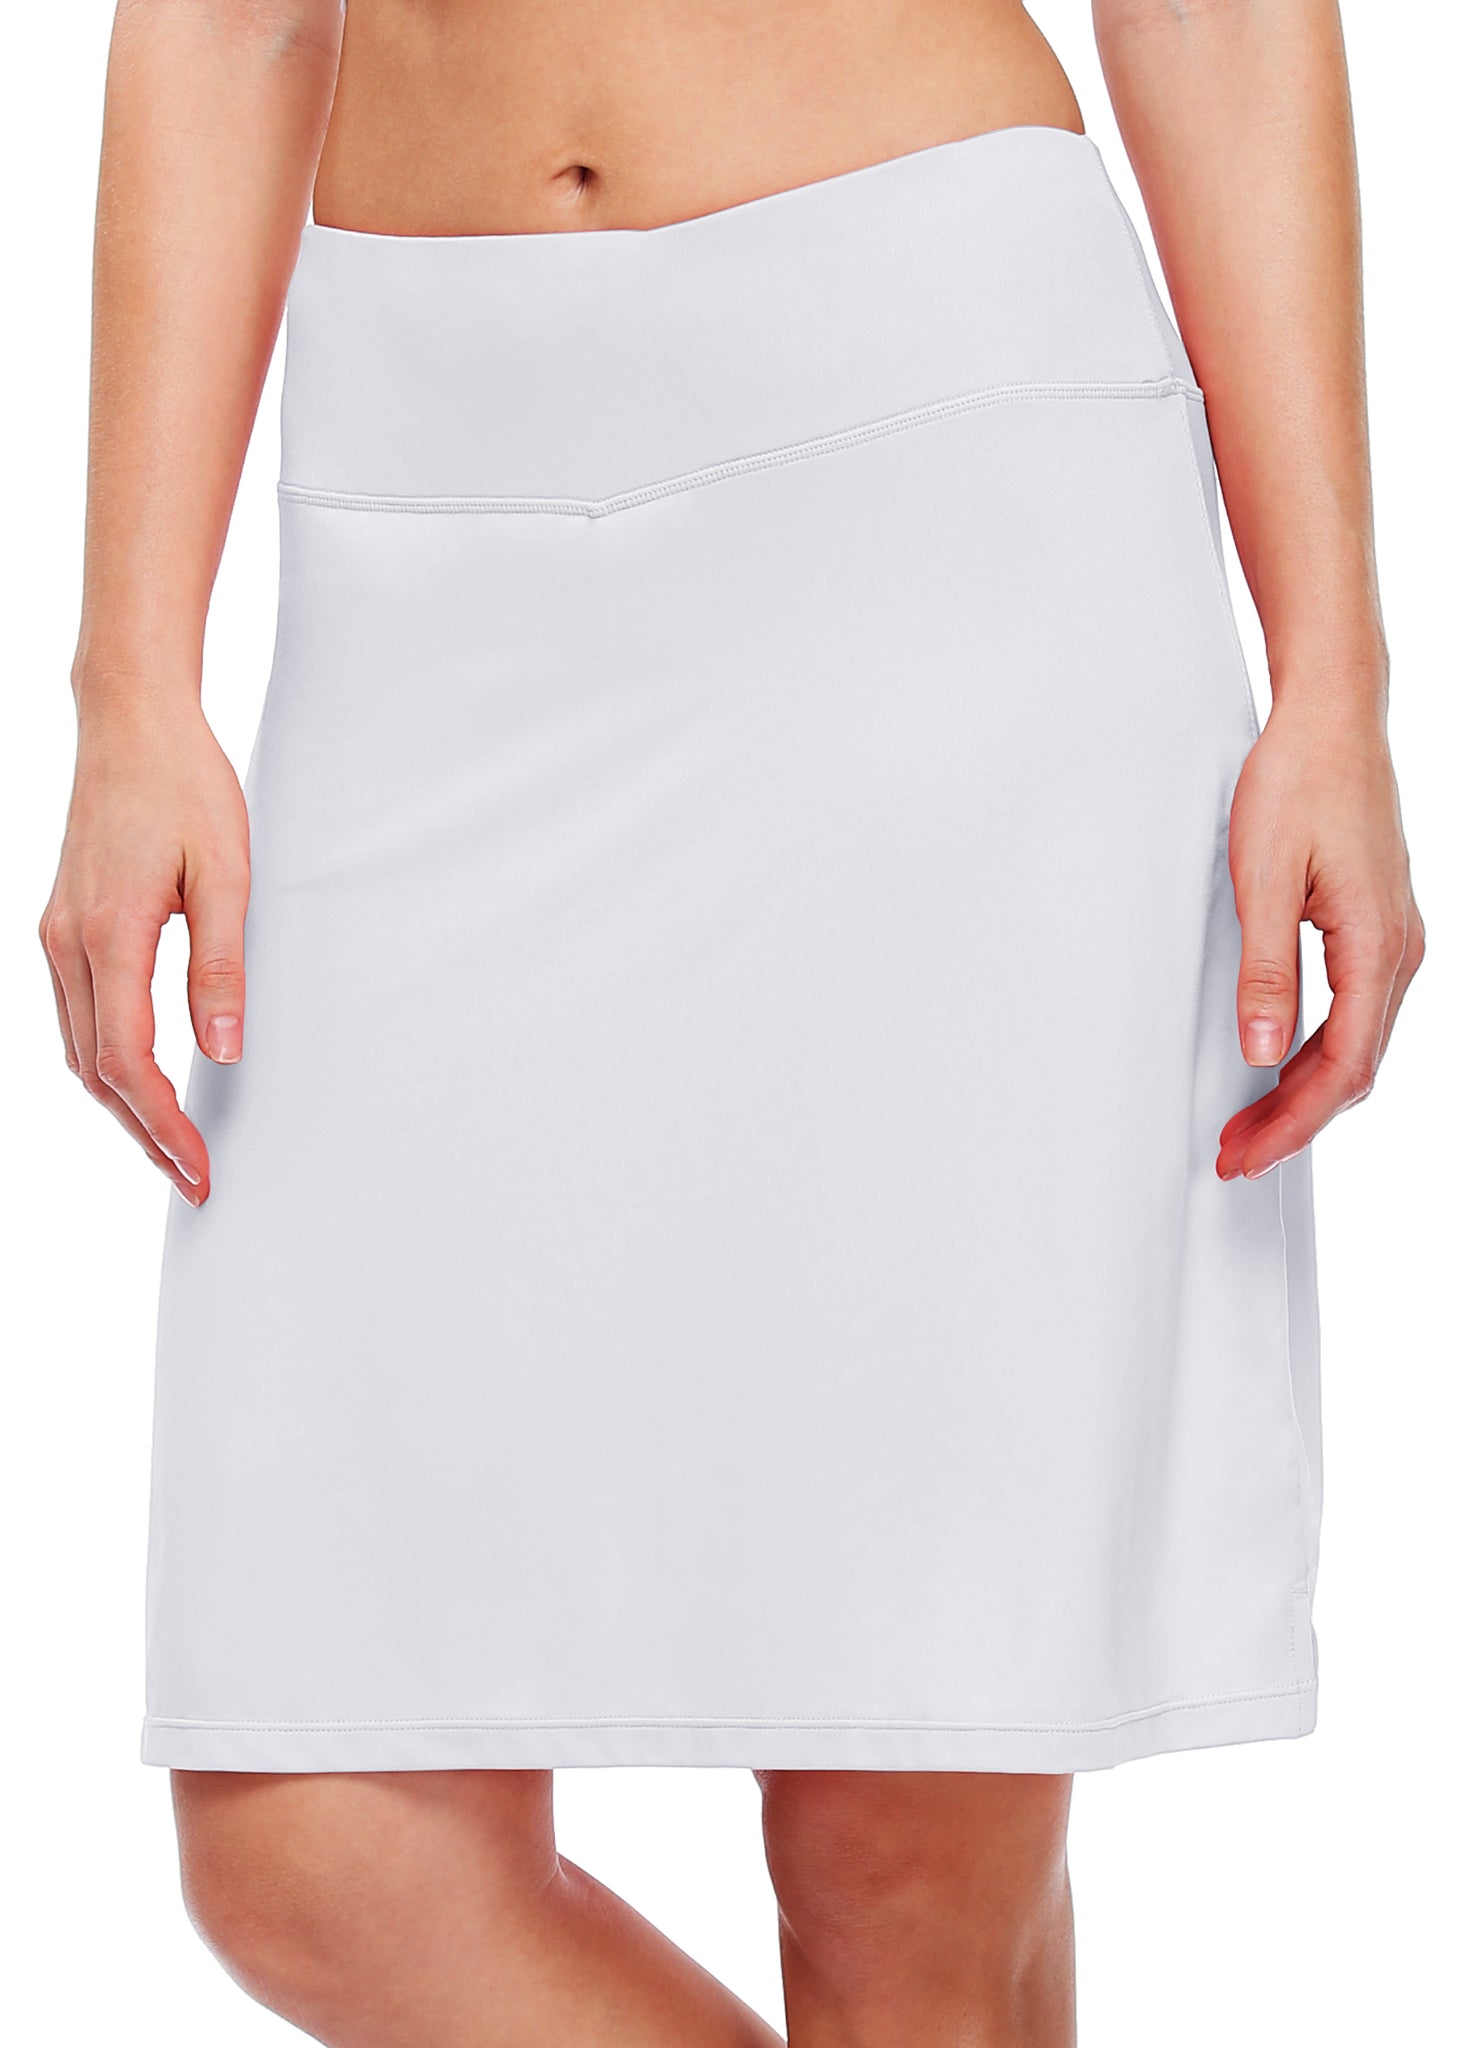 Women's Knee Length 20 Inch Sports Skorts Skirts_White1 